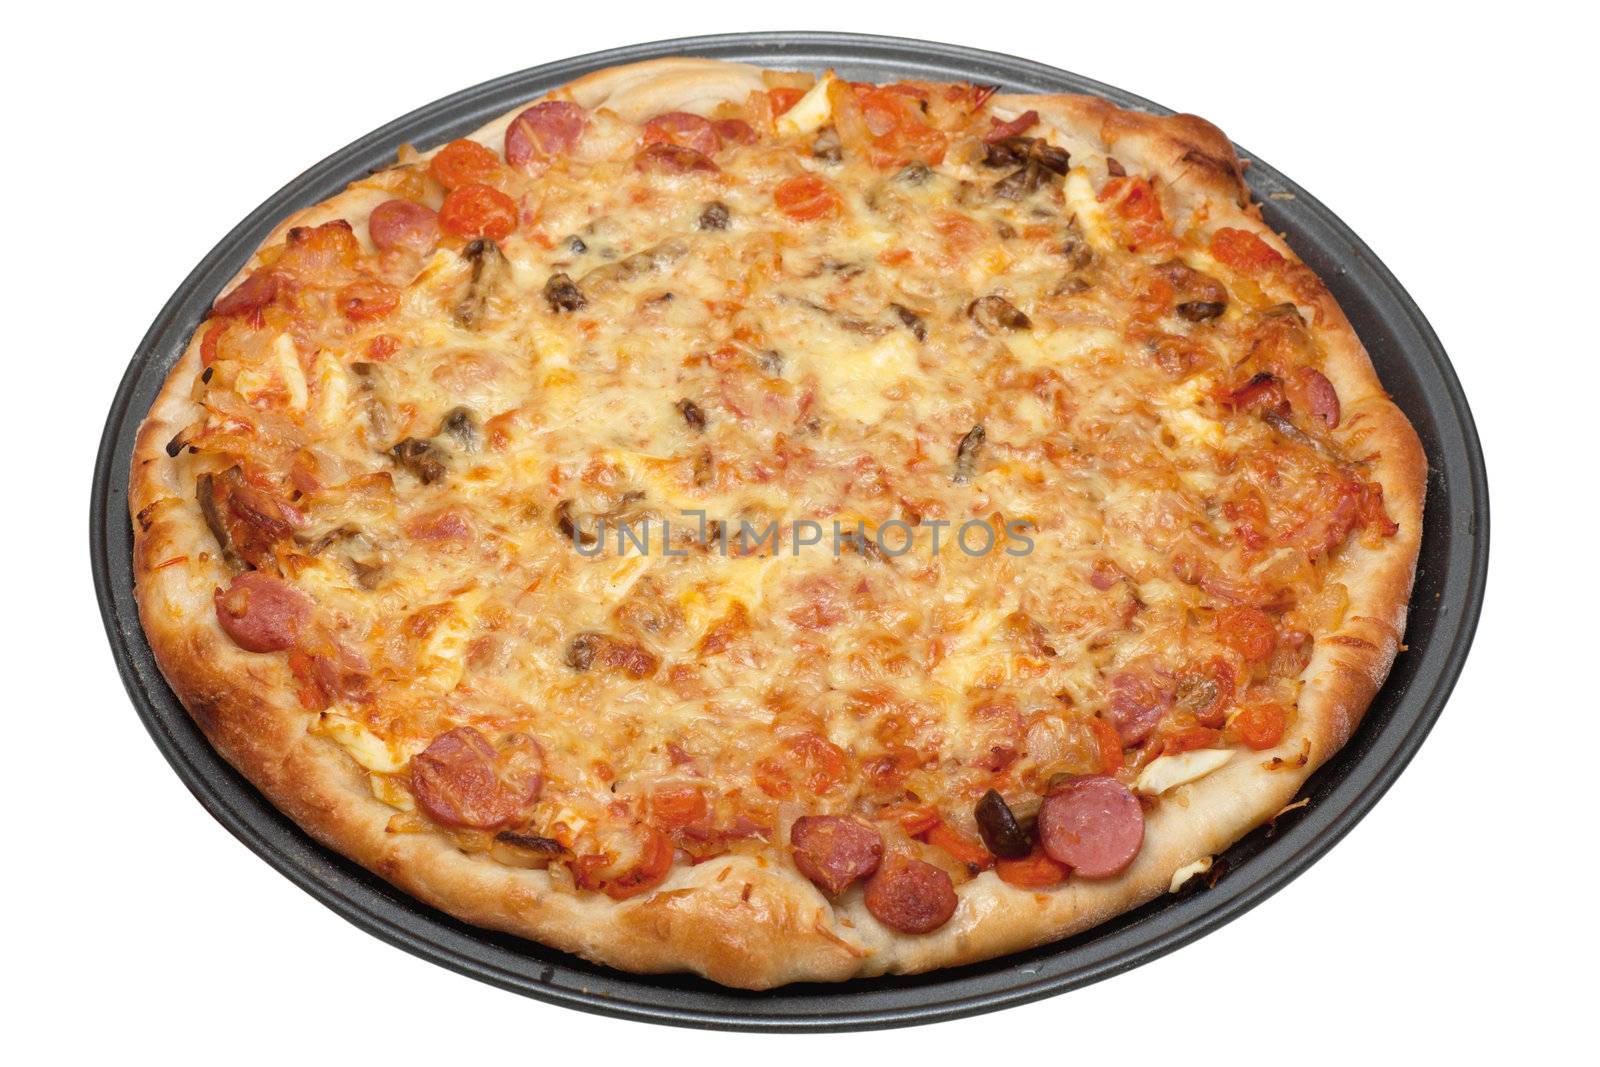 Hot fresh pizza on a baking tray isolated